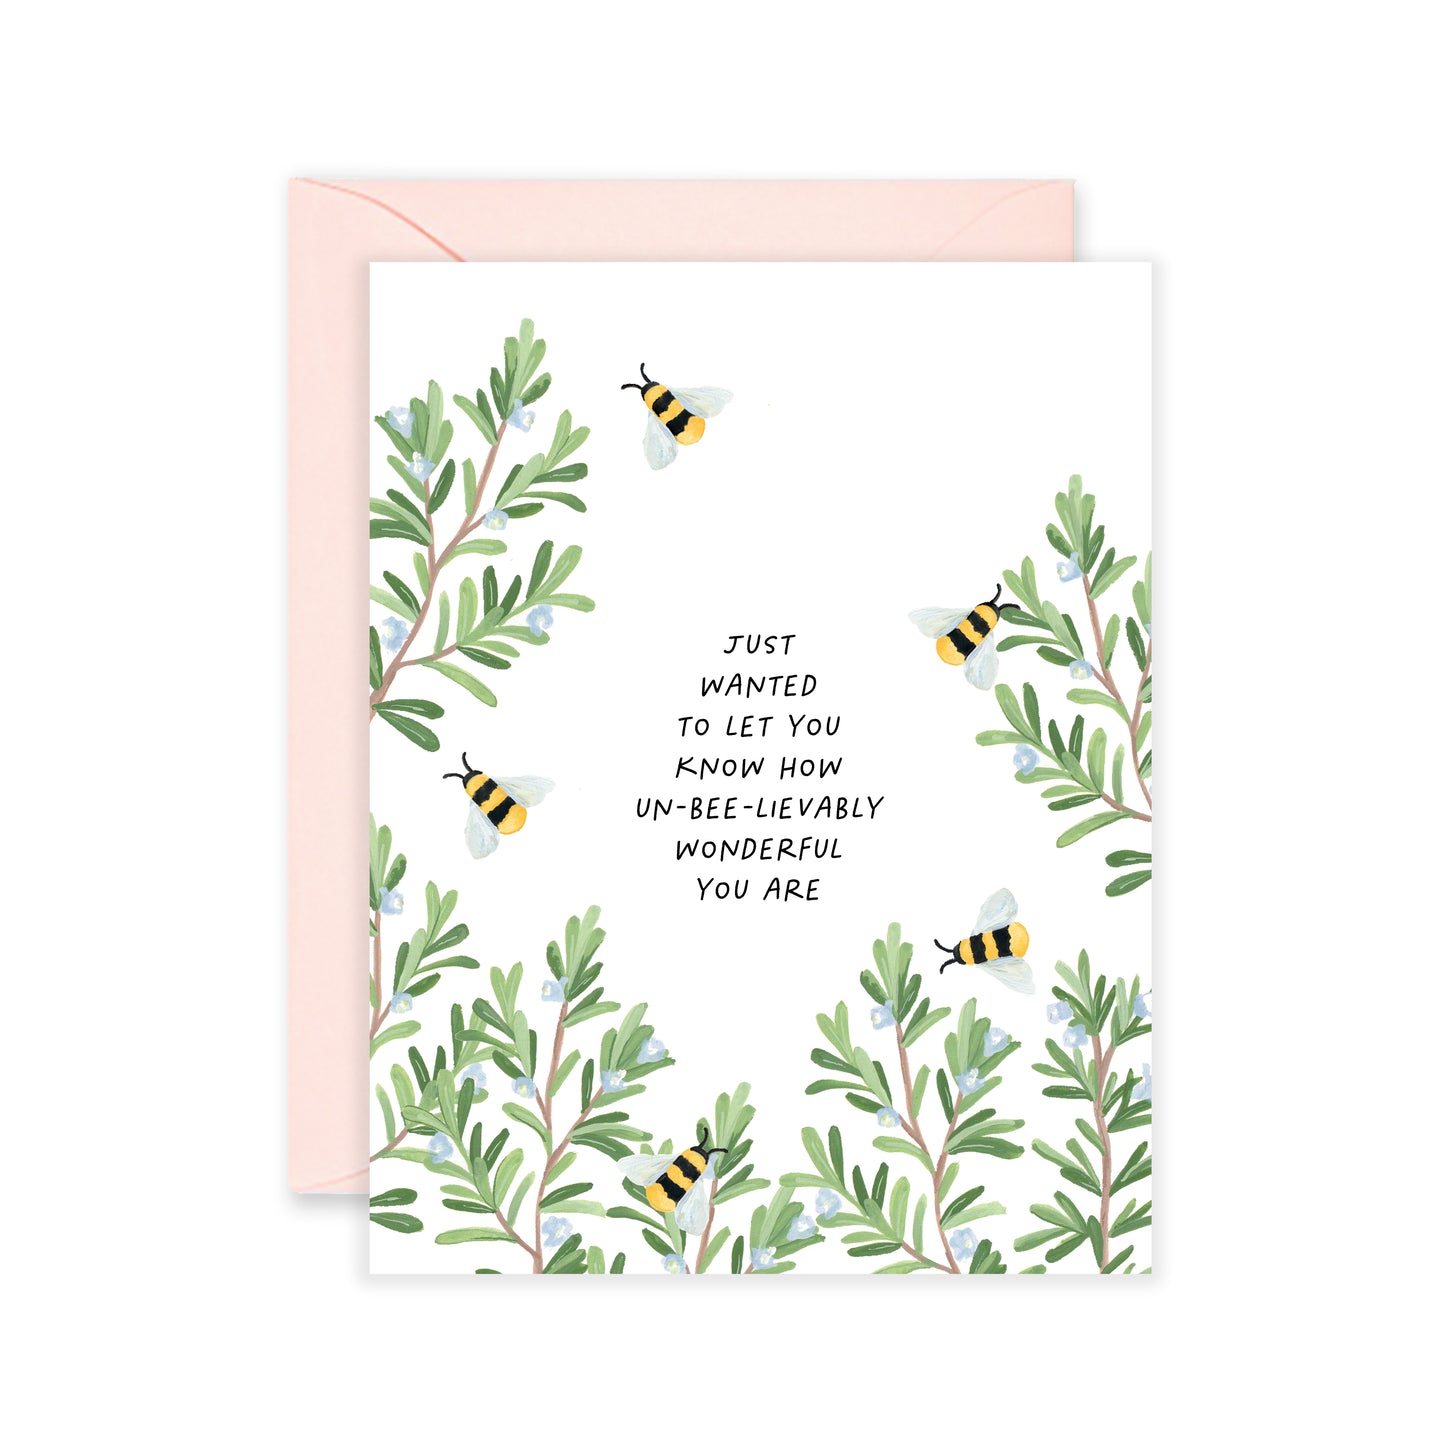 Un-BEE-lievably Wonderful Greeting Card